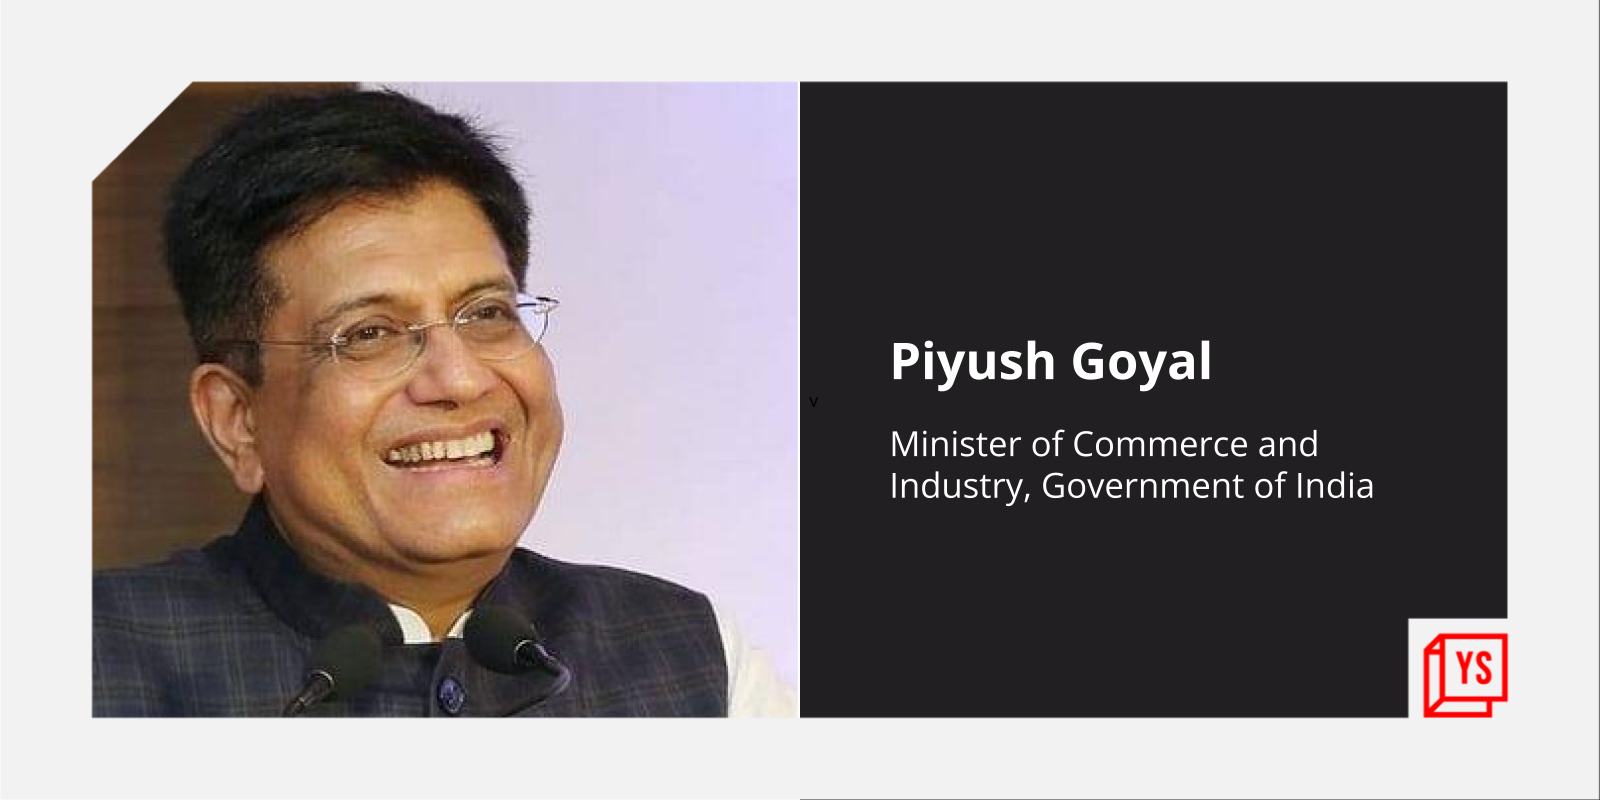 Indian startups created more than 7 lakh jobs: Piyush Goyal